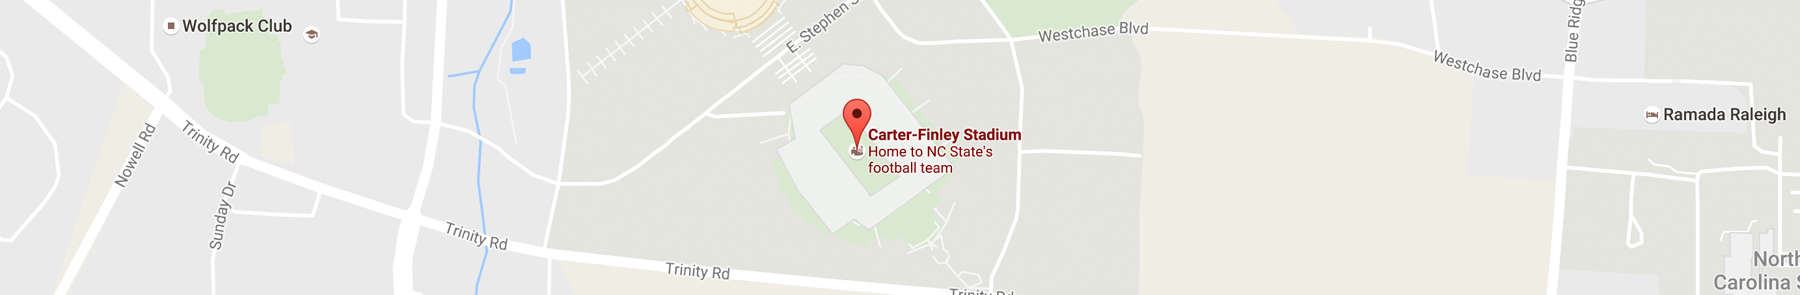 Map rendering of Carter-Finley Stadium's location